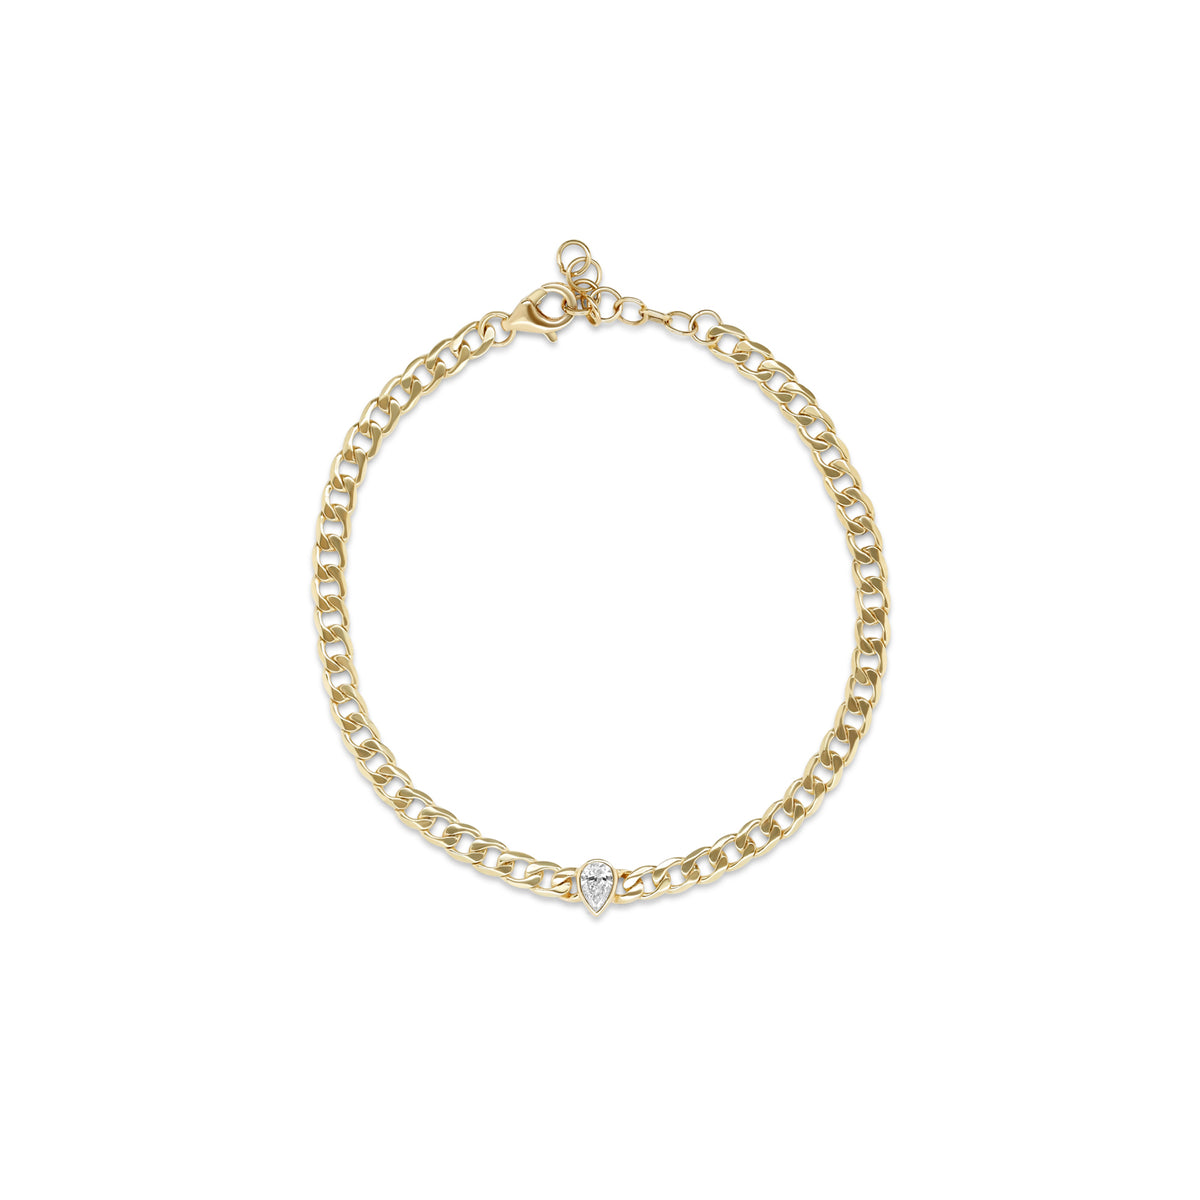 14k yellow gold curb chain bracelet with bezel set pear shape diamond